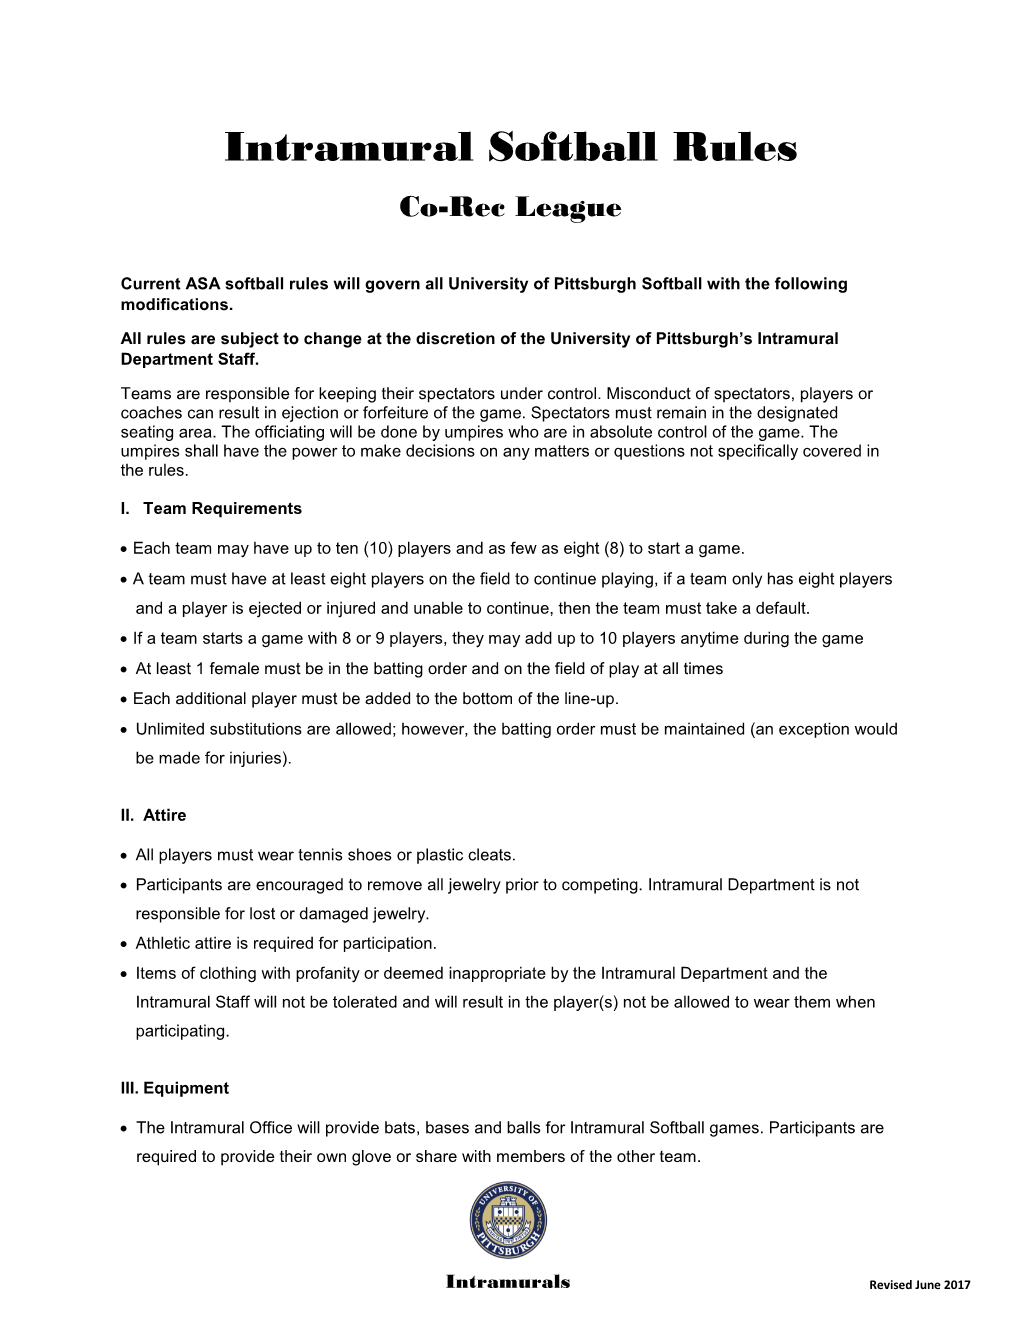 Intramural Softball Rules Co-Rec League